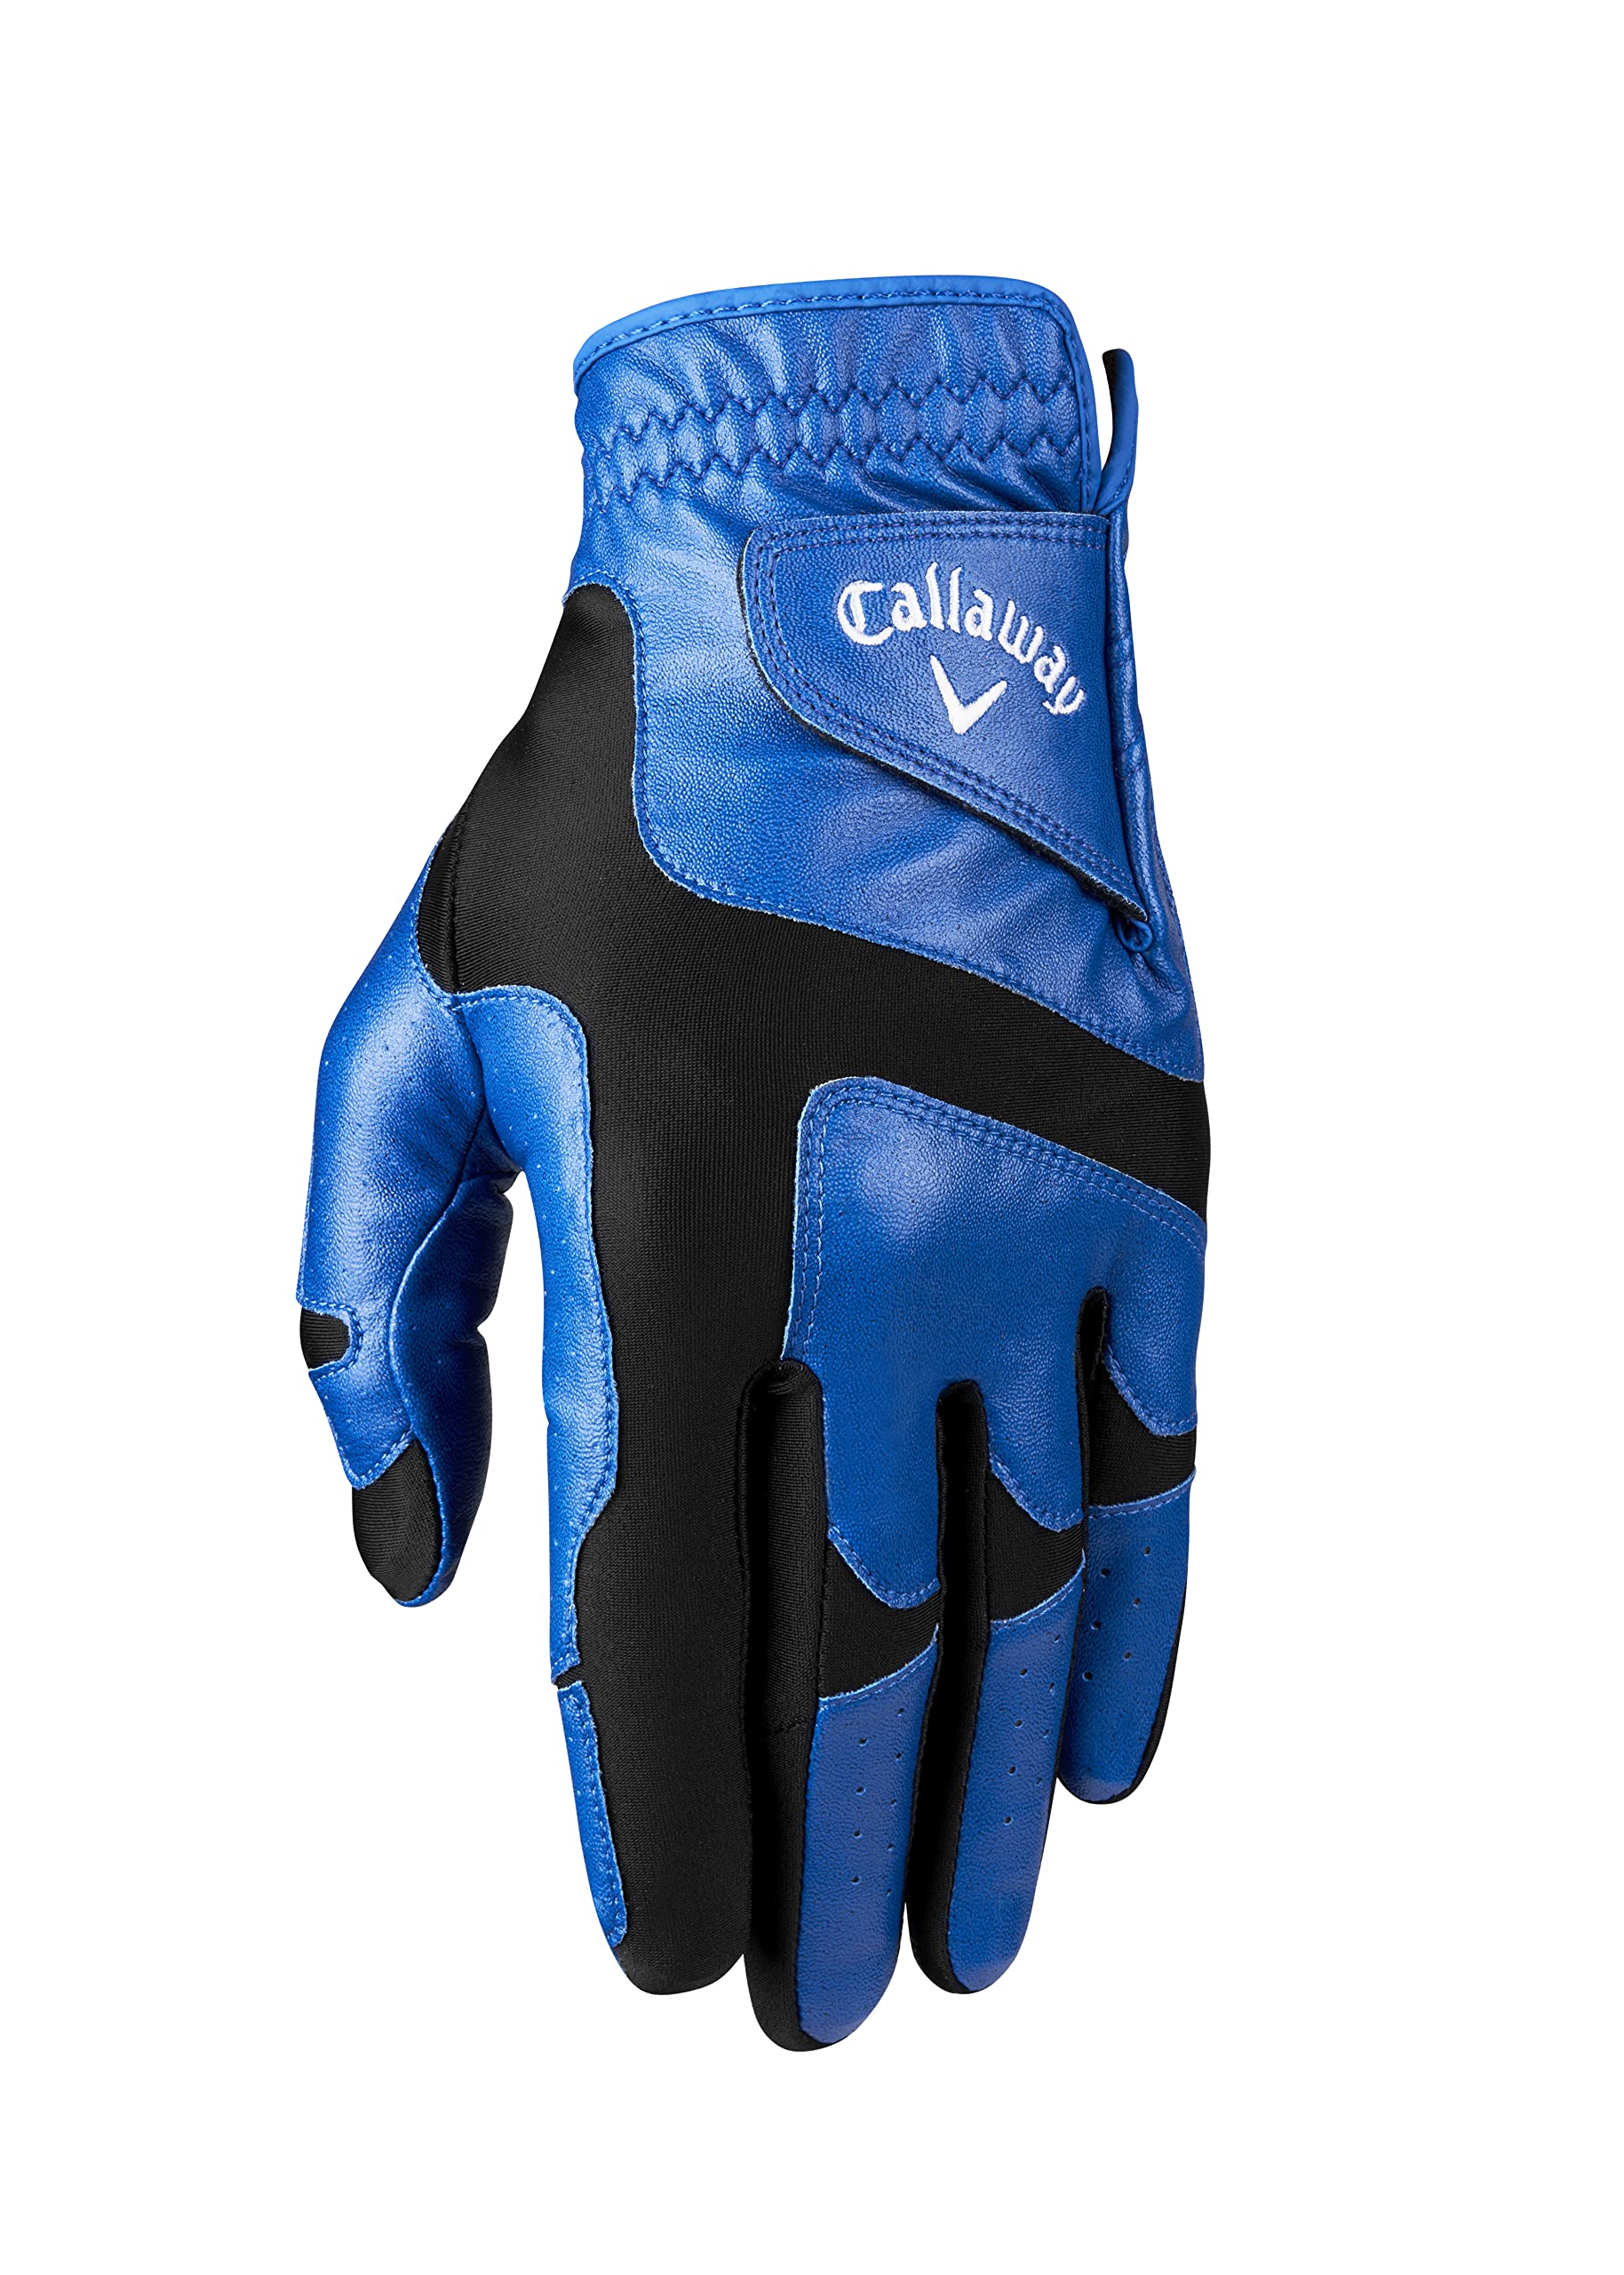 Callaway Golf Opti Fit Seamless Universal Fit Golf Glove